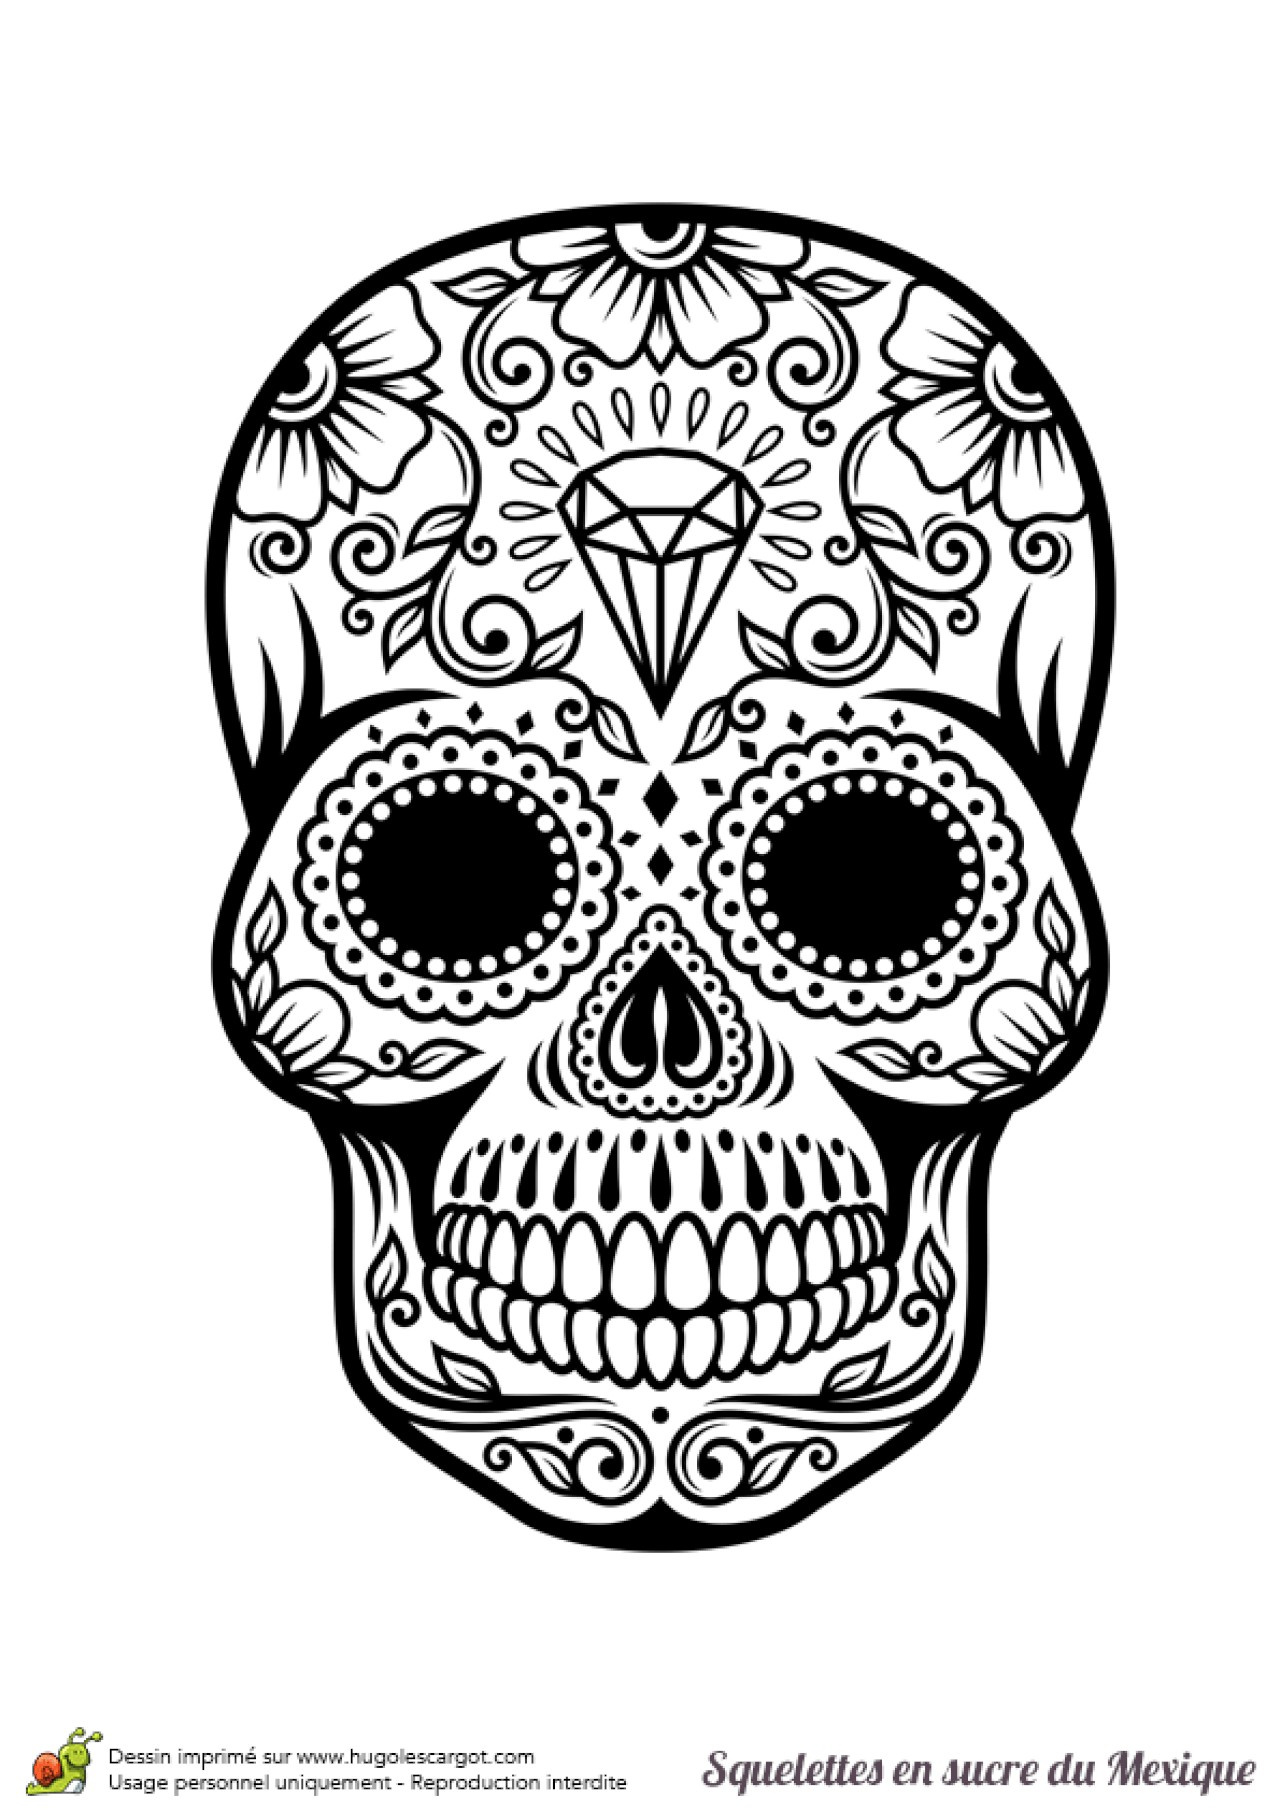 how to draw a sugar skull easy via dragoart skull avec et dessin a imprimer tete de mort mexicaine 39 906x1482px dessin a imprimer tete de mort mexicaine